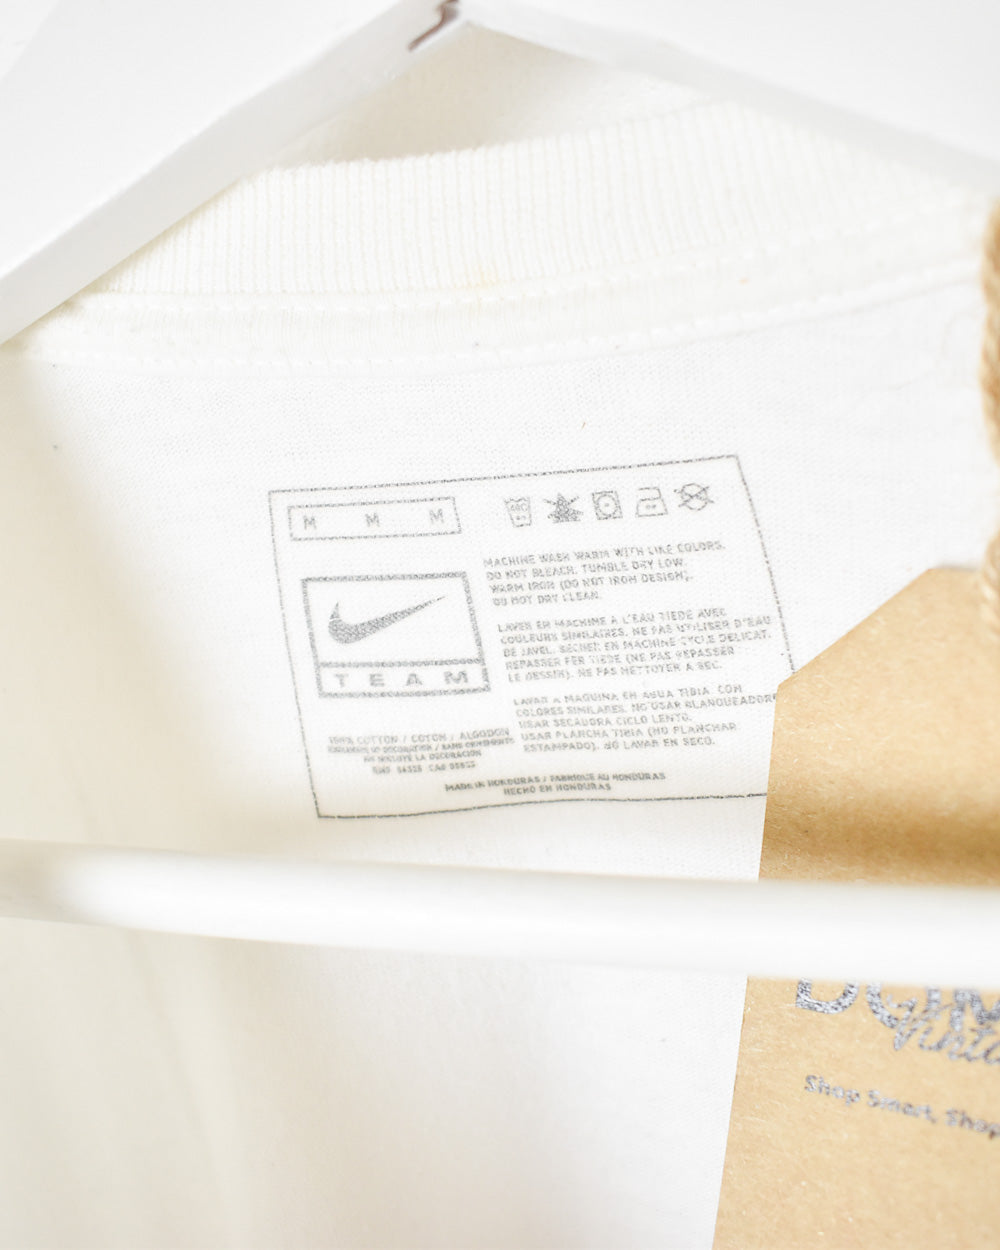 White Nike United States National Team T-Shirt - Medium